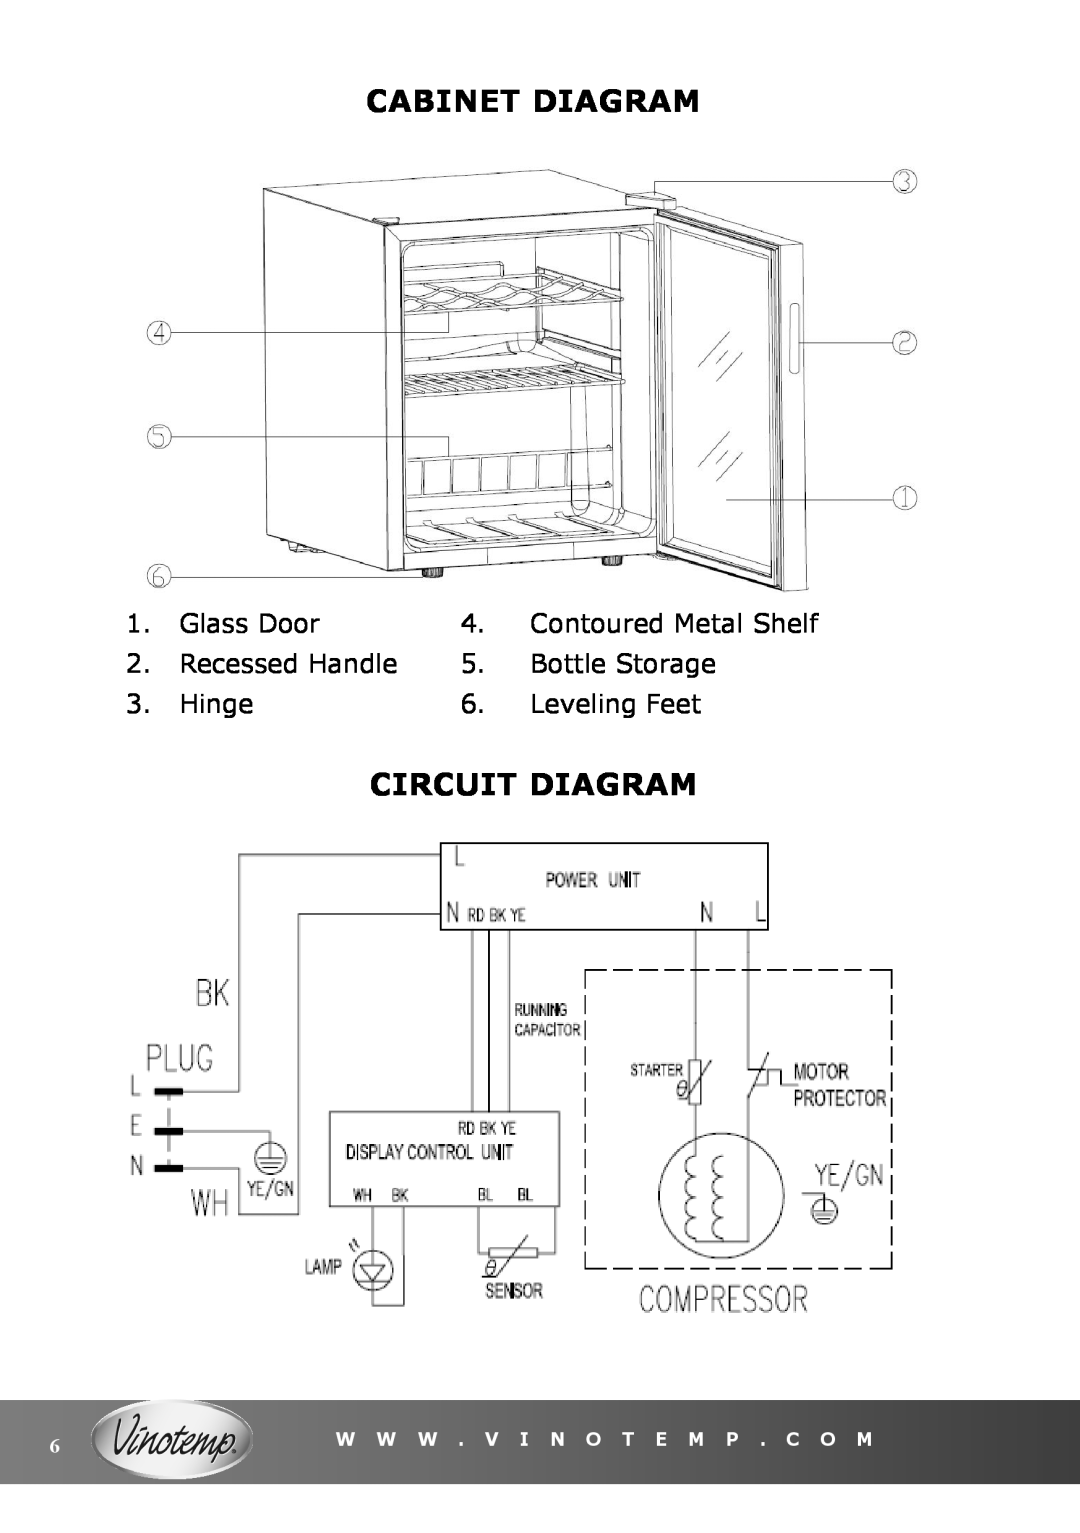 Vinotemp VT-15 TS owner manual Cabinet Diagram, Circuit Diagram 